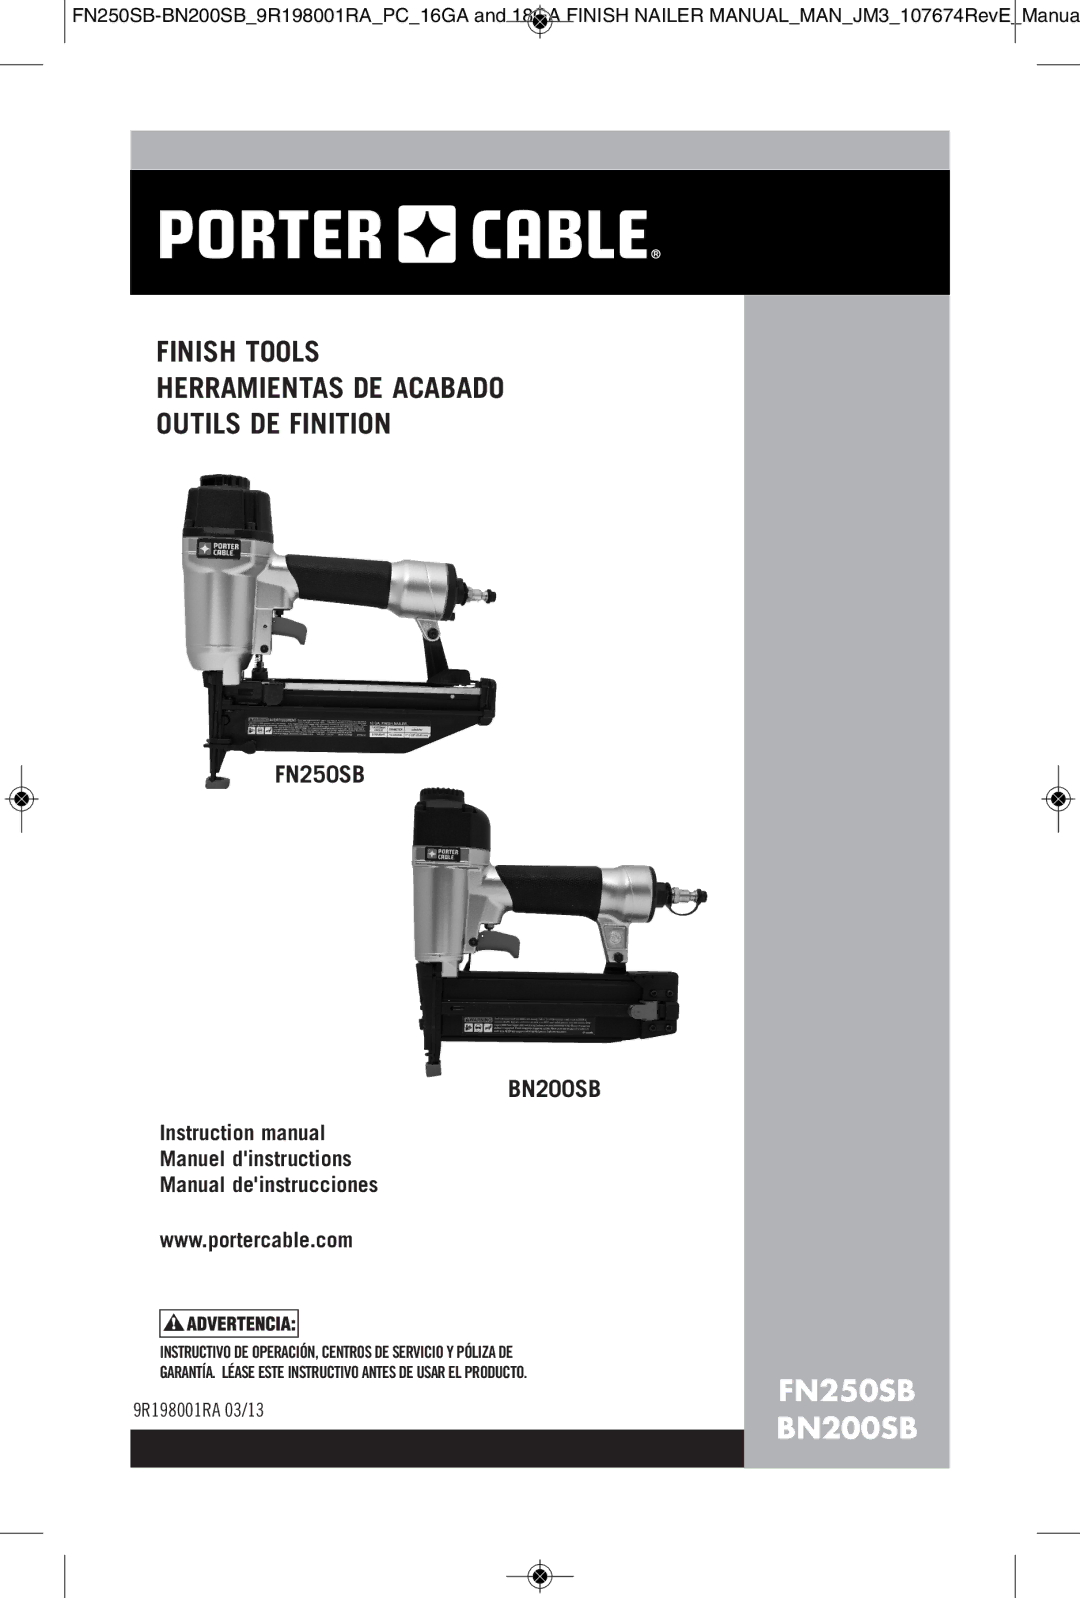 Porter-Cable instruction manual FN250SB BN200SB 